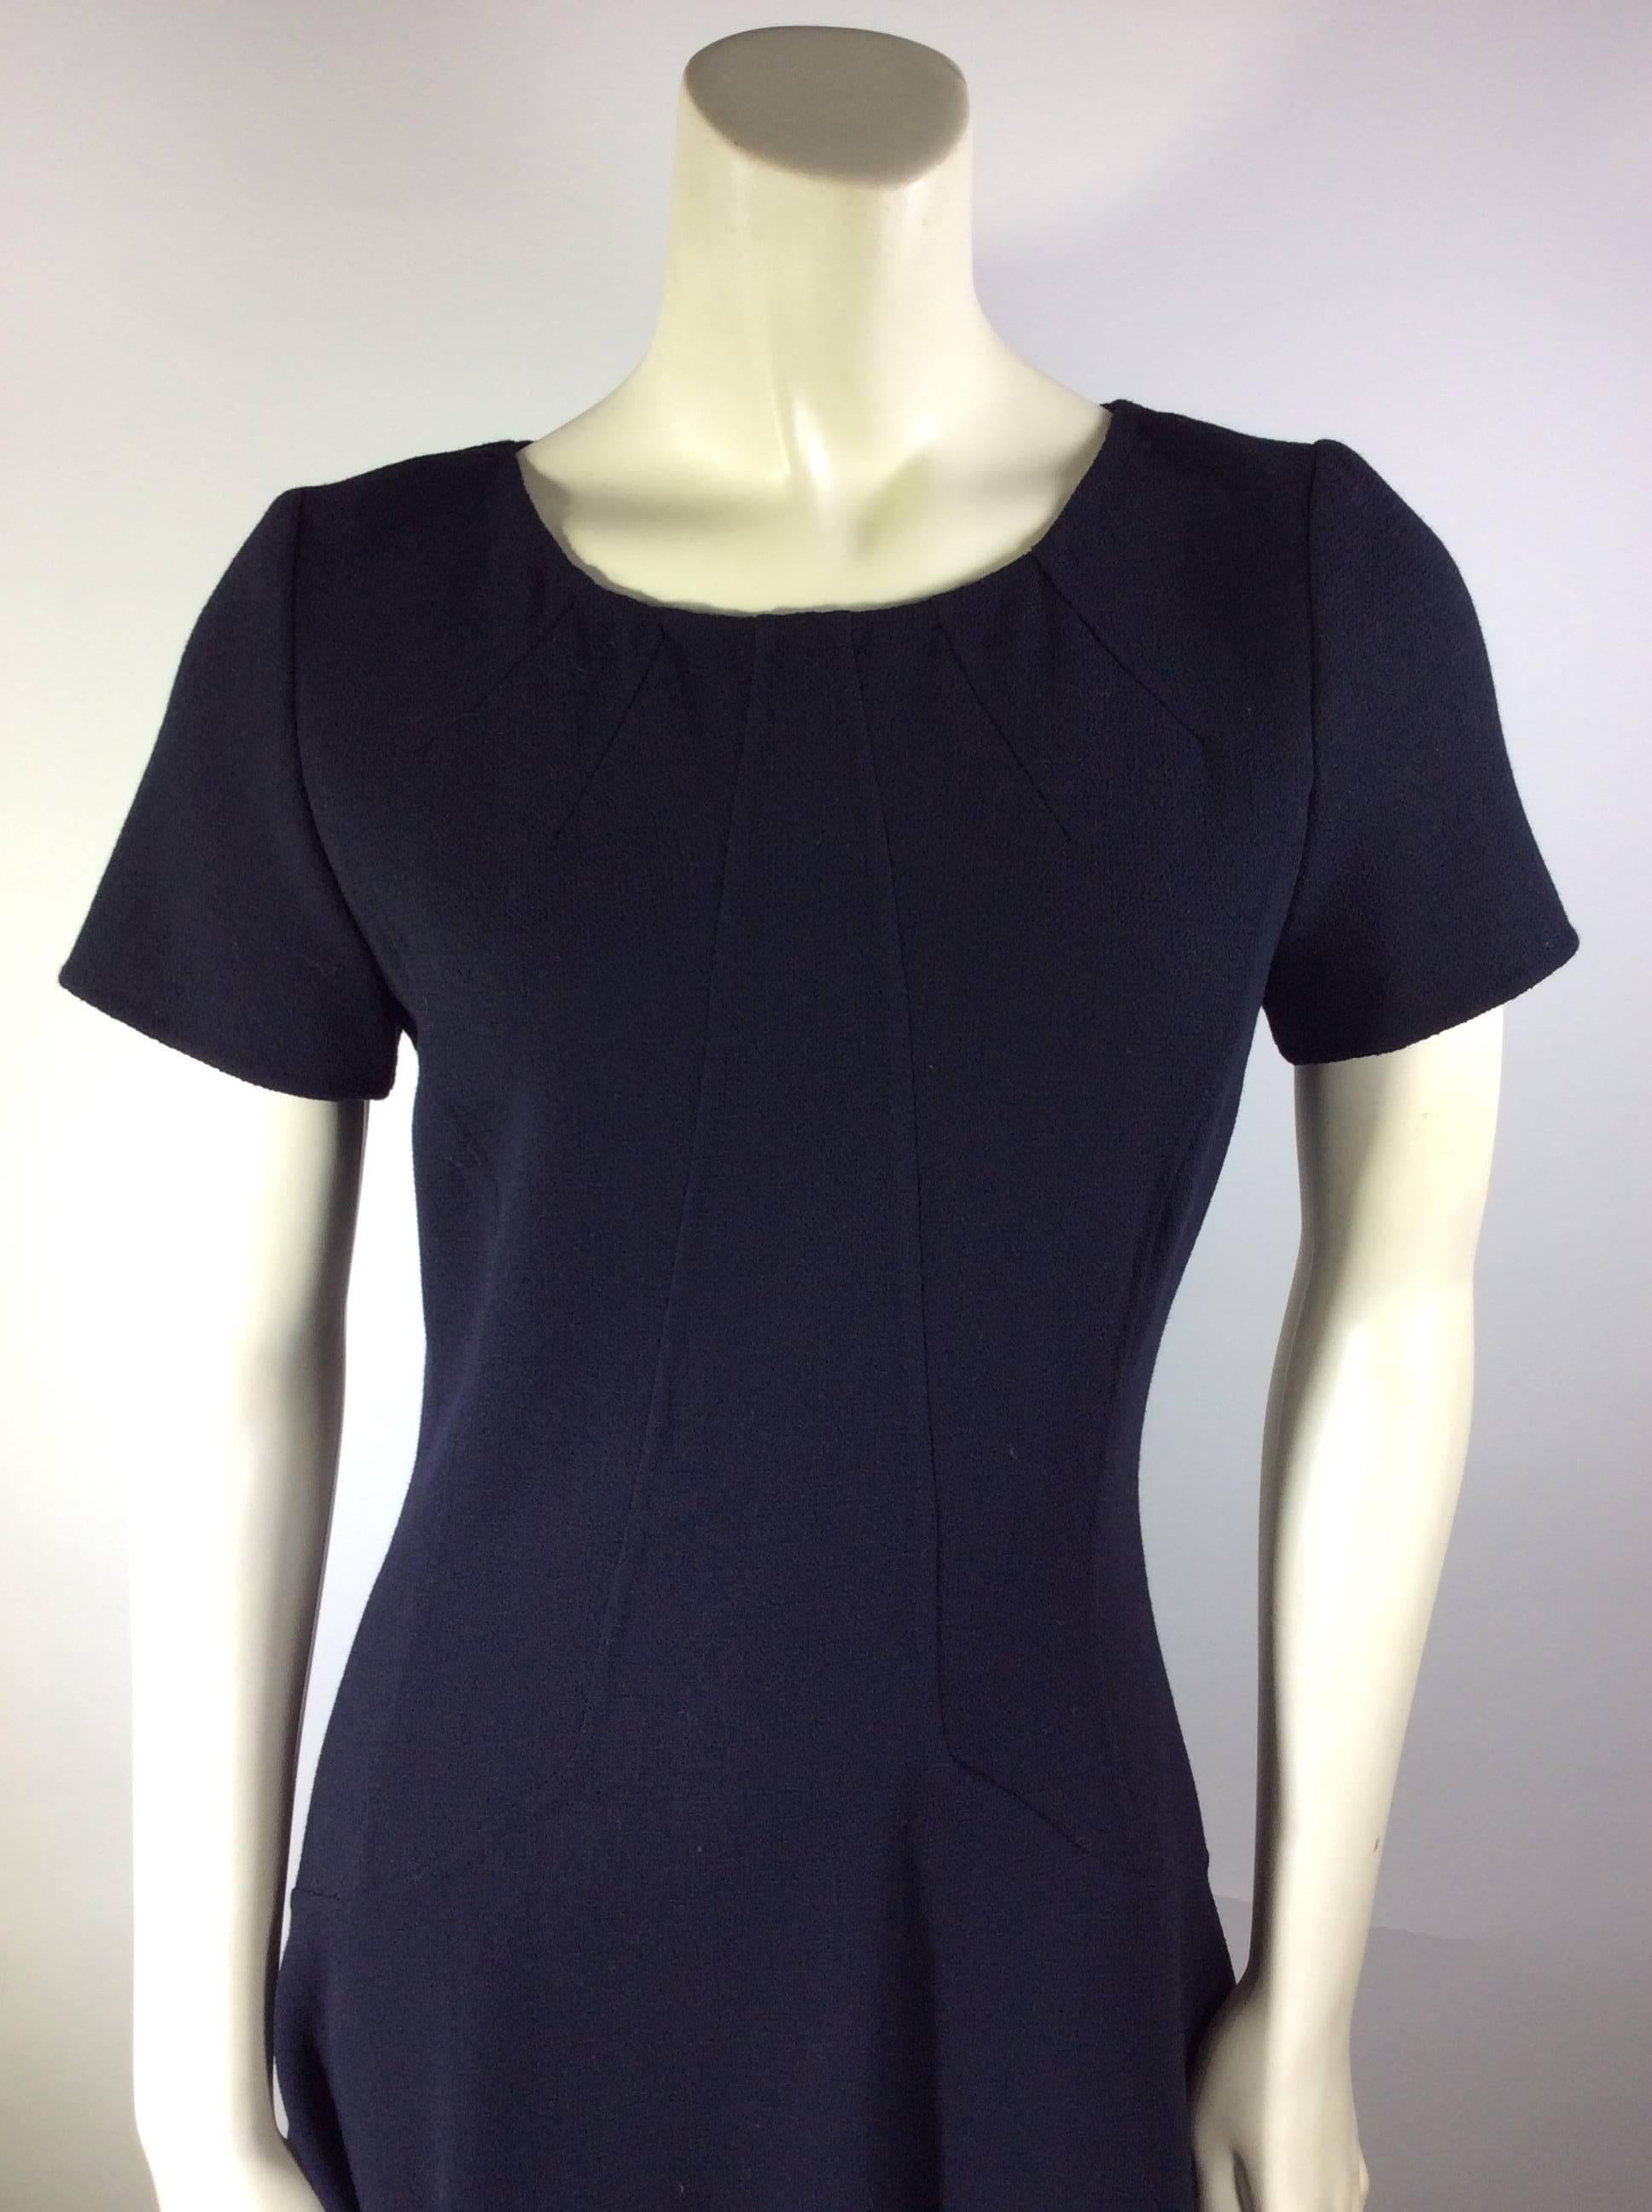 Oscar de la Renta Short Sleeve Navy Dress
Mid Length Bottom
100% Wool
100% Silk Lining
New, Never Before Worn
